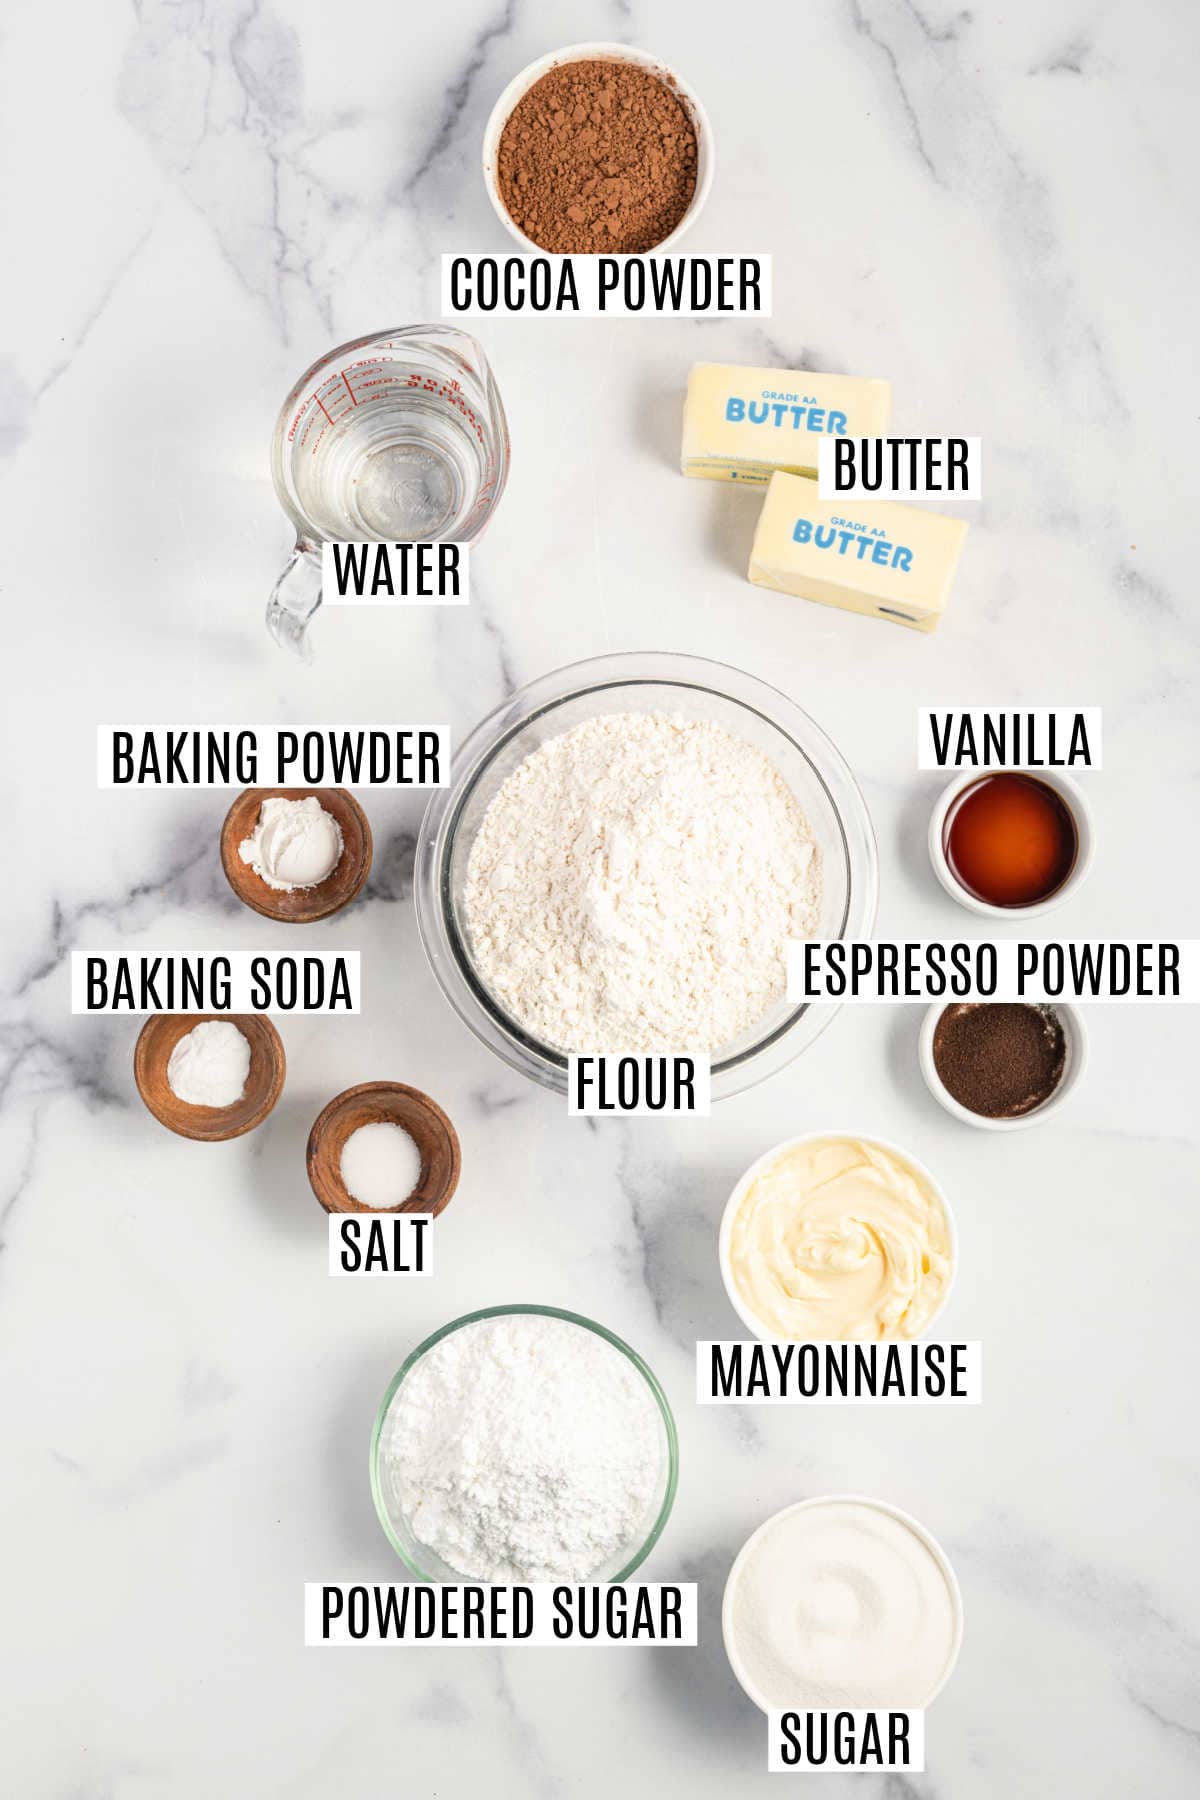 Ingredients needed to make chocolate mayonnaise cake.